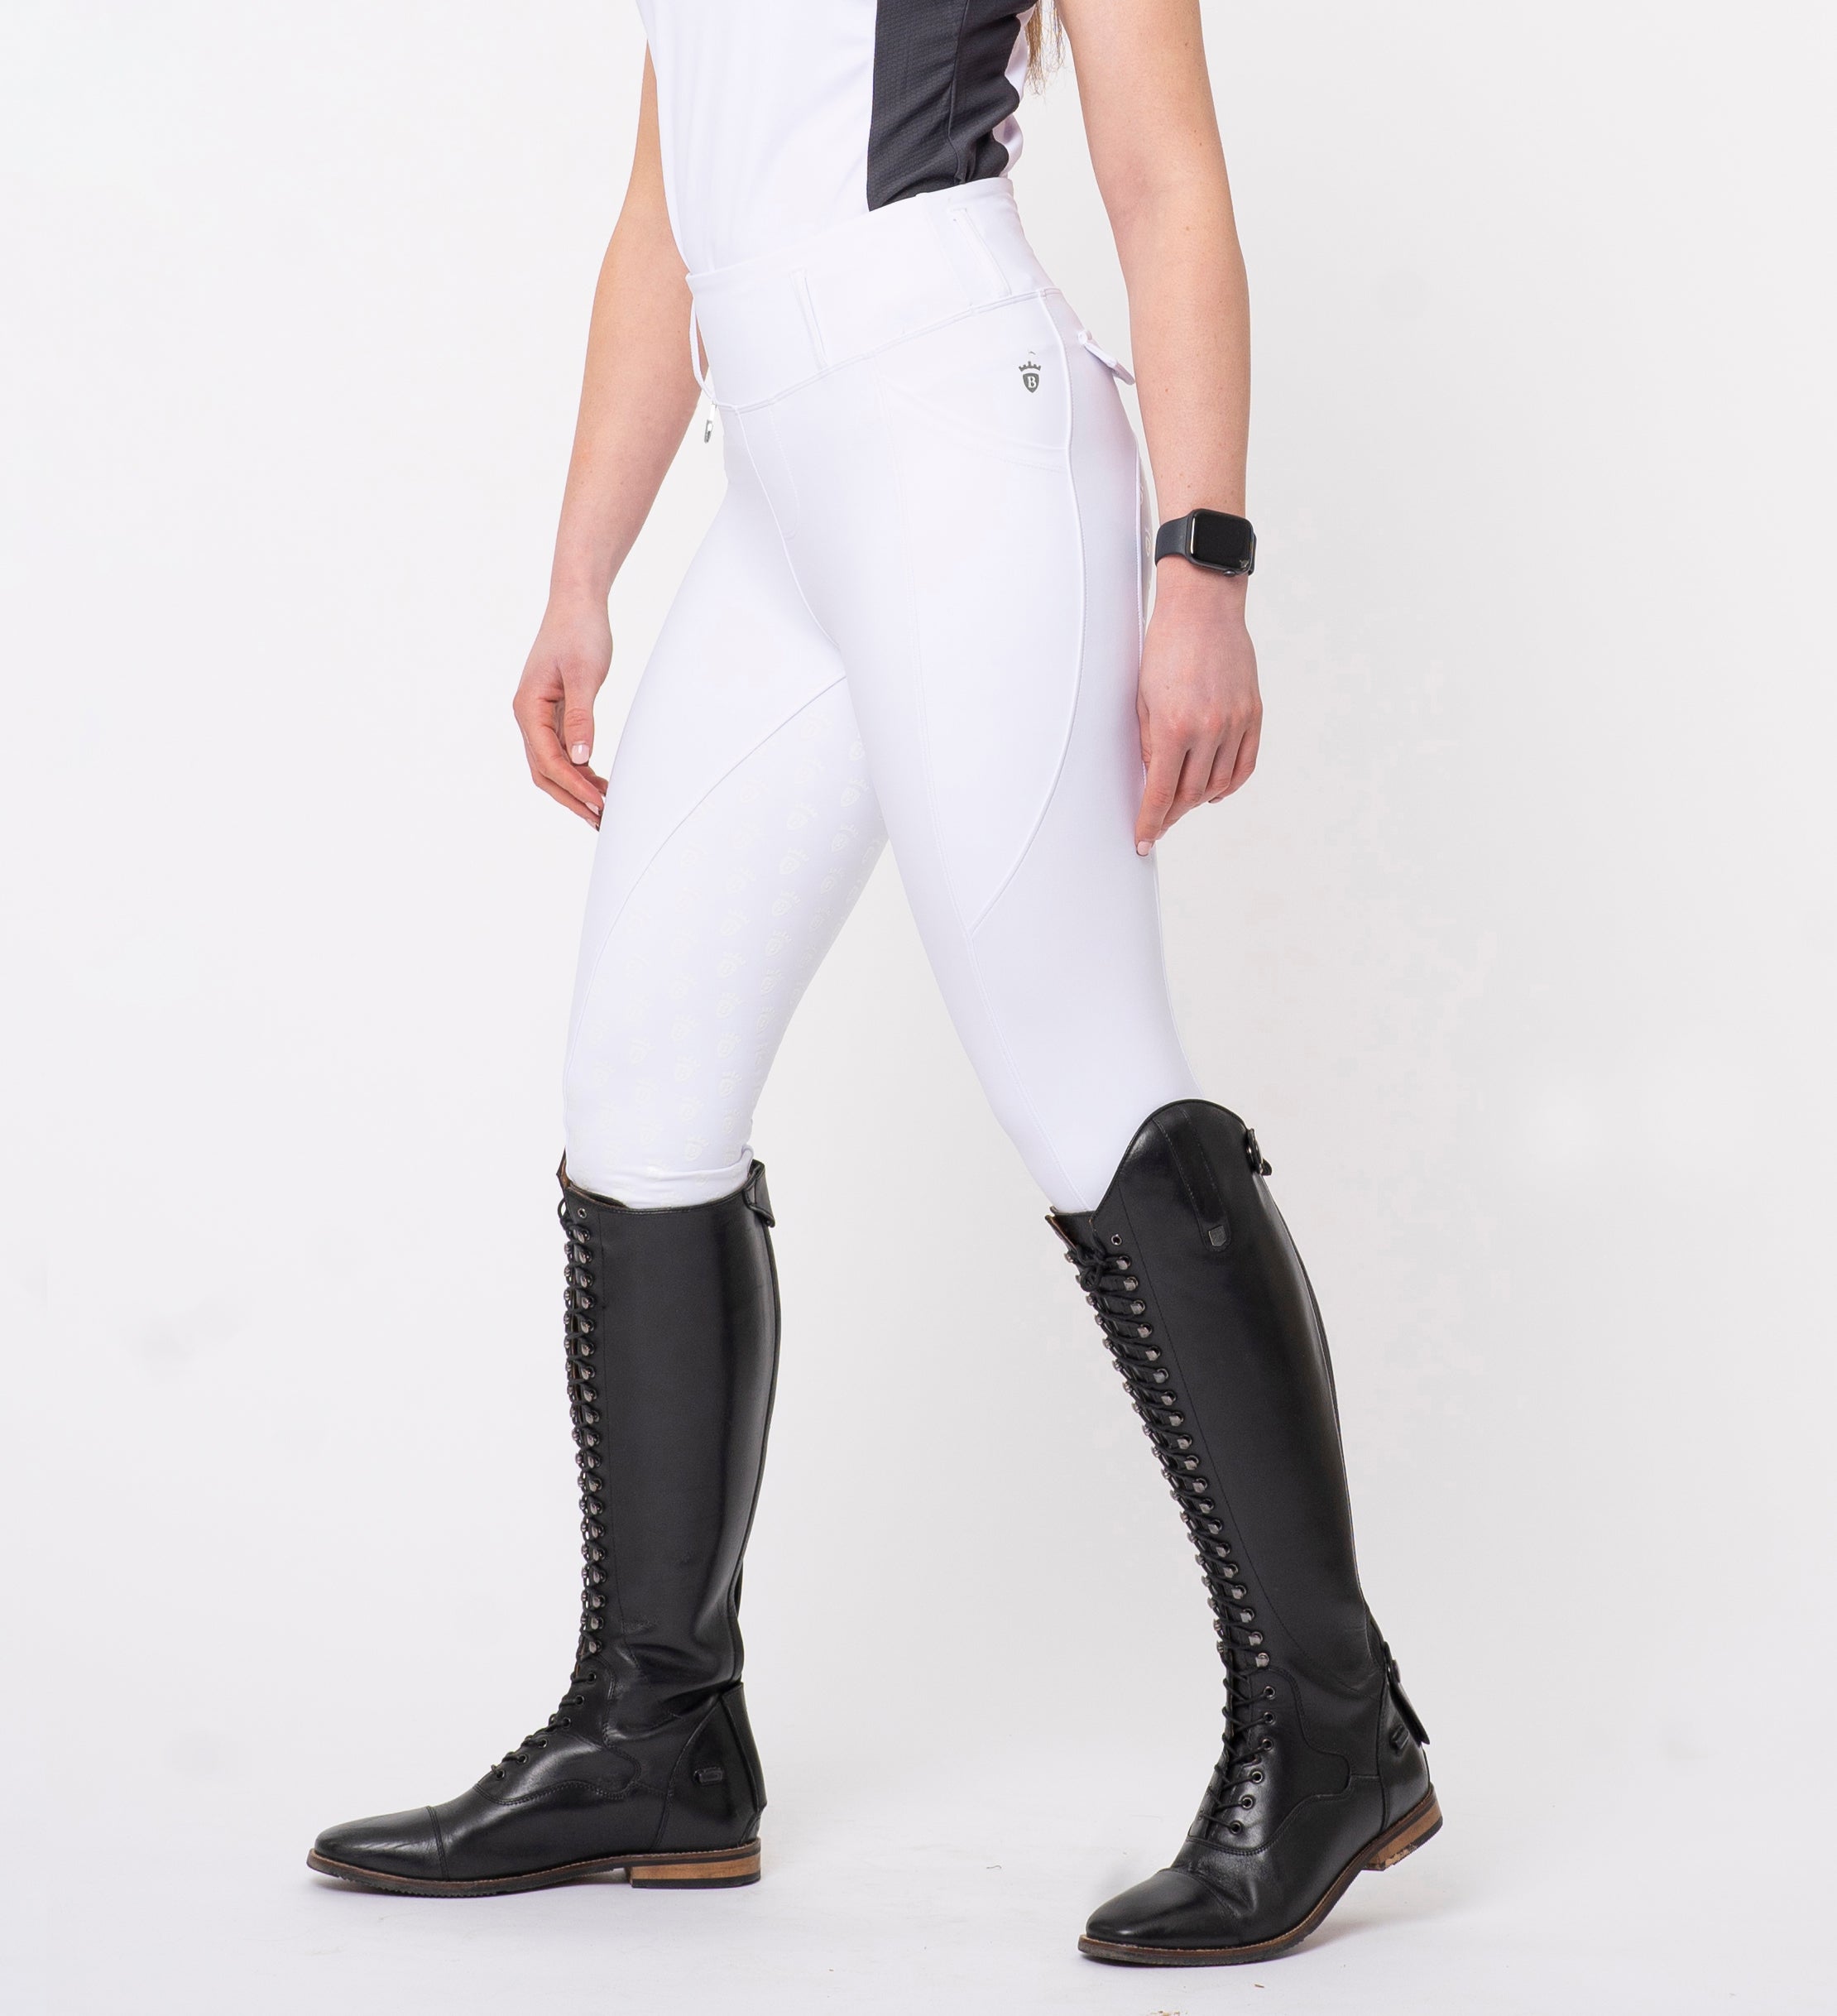 White & Silver Riding Breggings 3.0 – Blackfort Equestrian